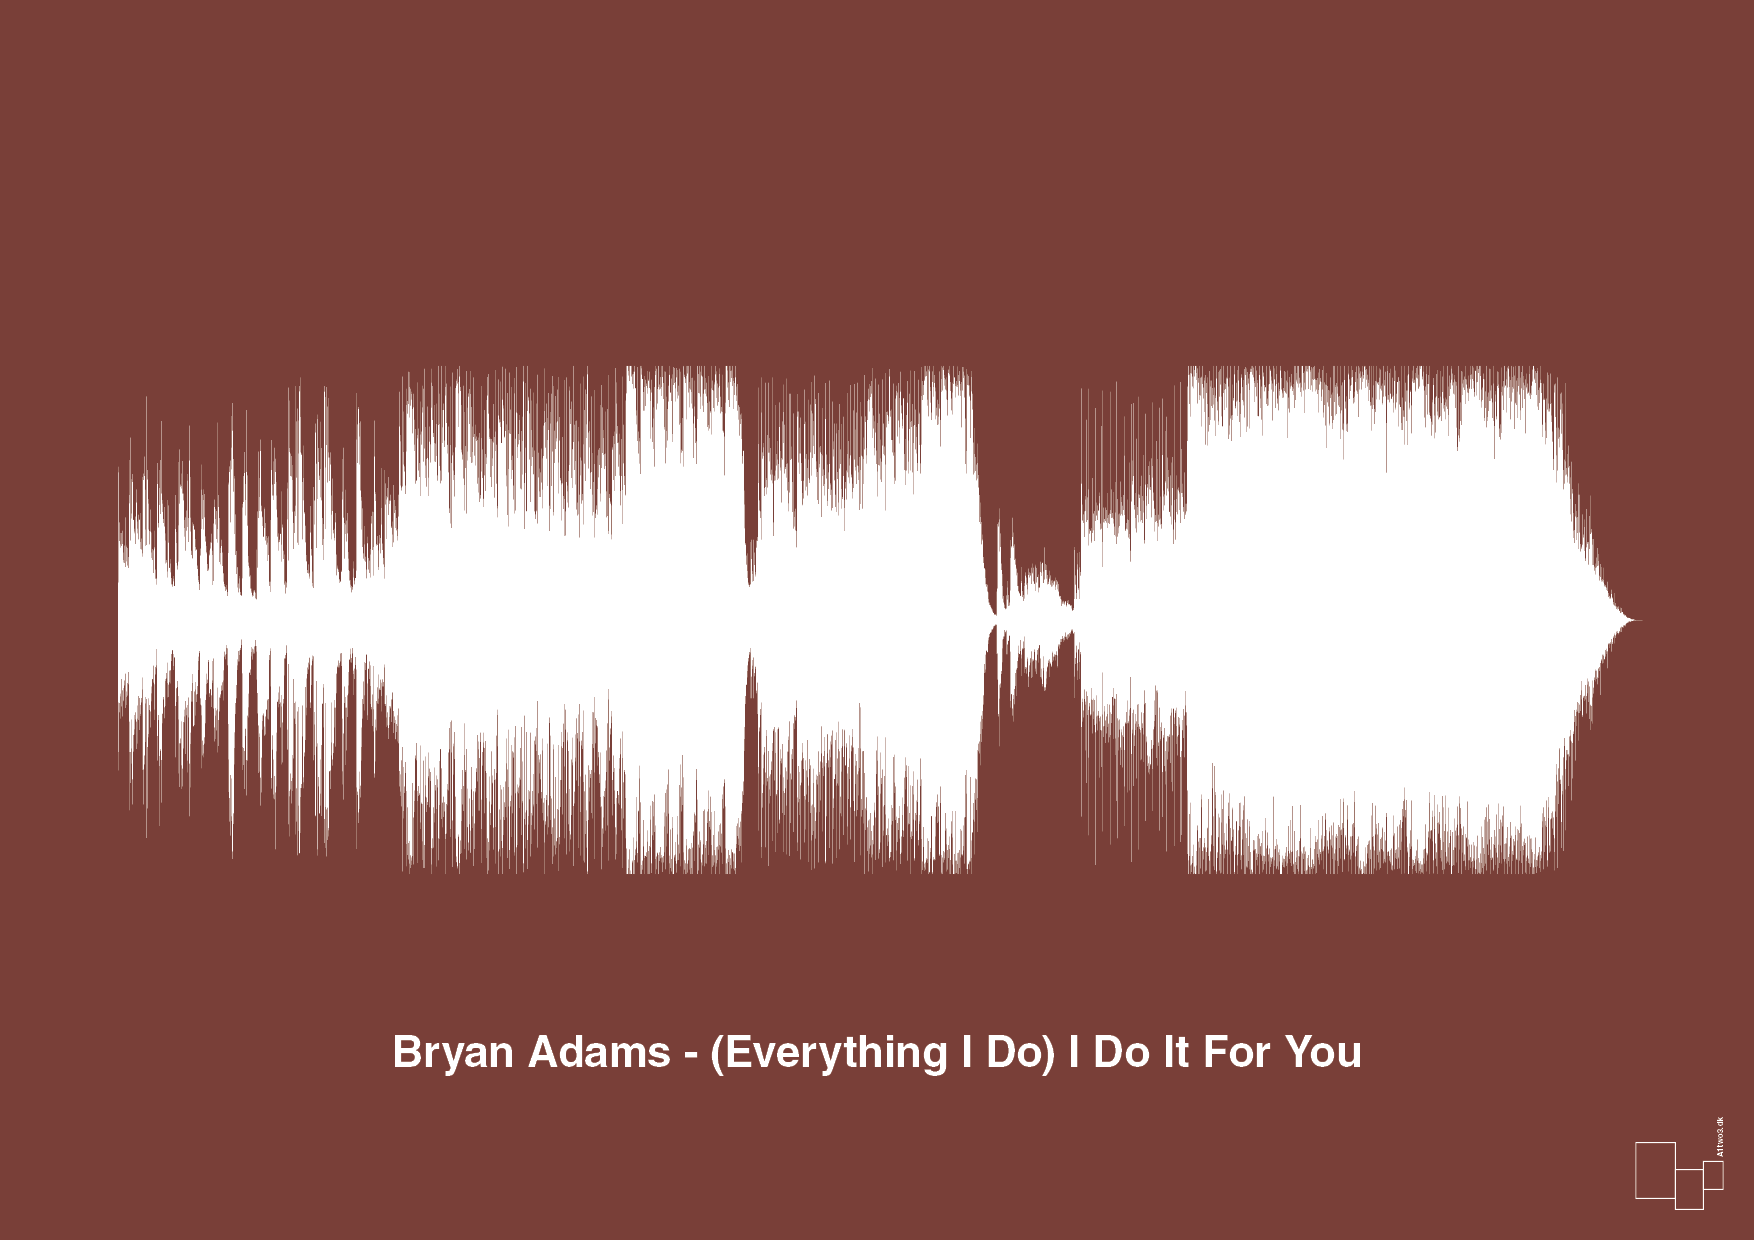 bryan adams - (everything i do) i do it for you - Plakat med Musik i Red Pepper